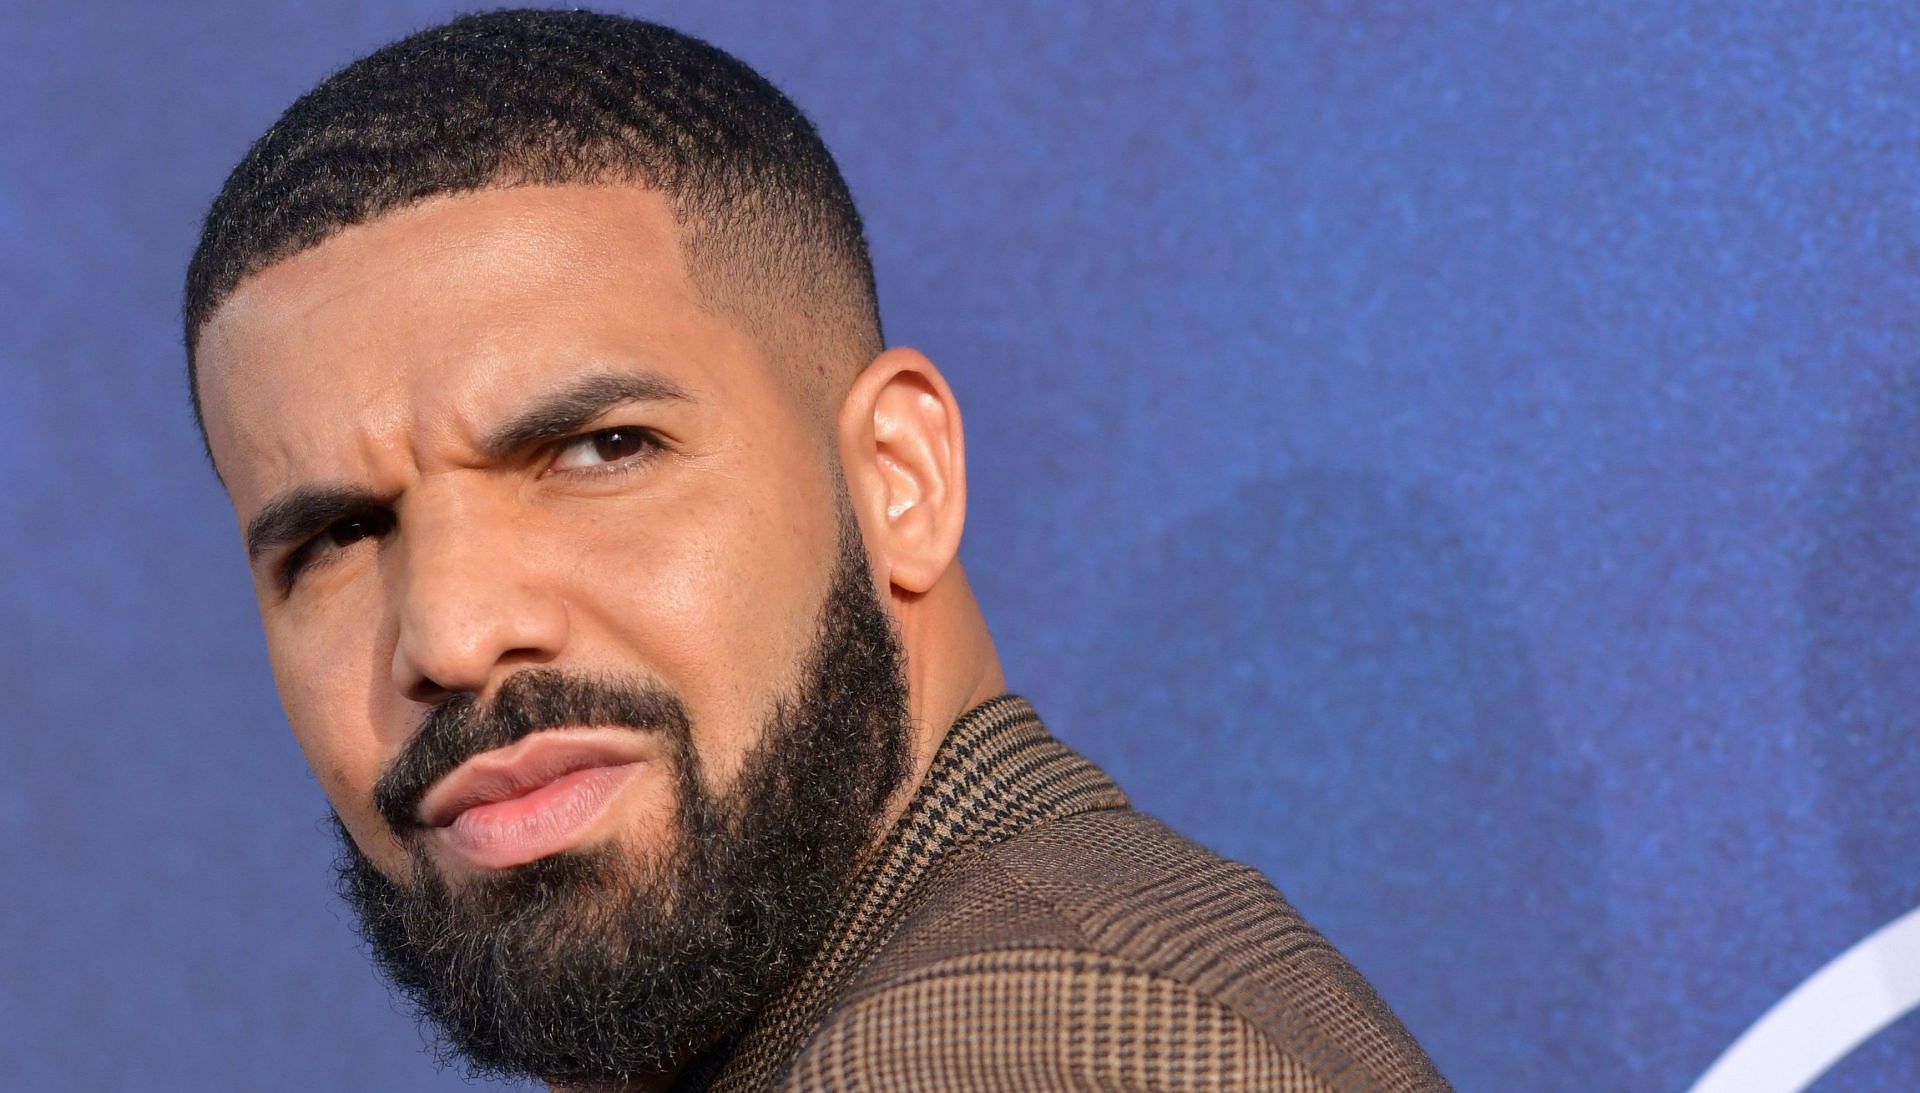 Drake at the LA premiere of Euphoria in 2019 (Image via Chris Delmas/AFP/Getty Images)